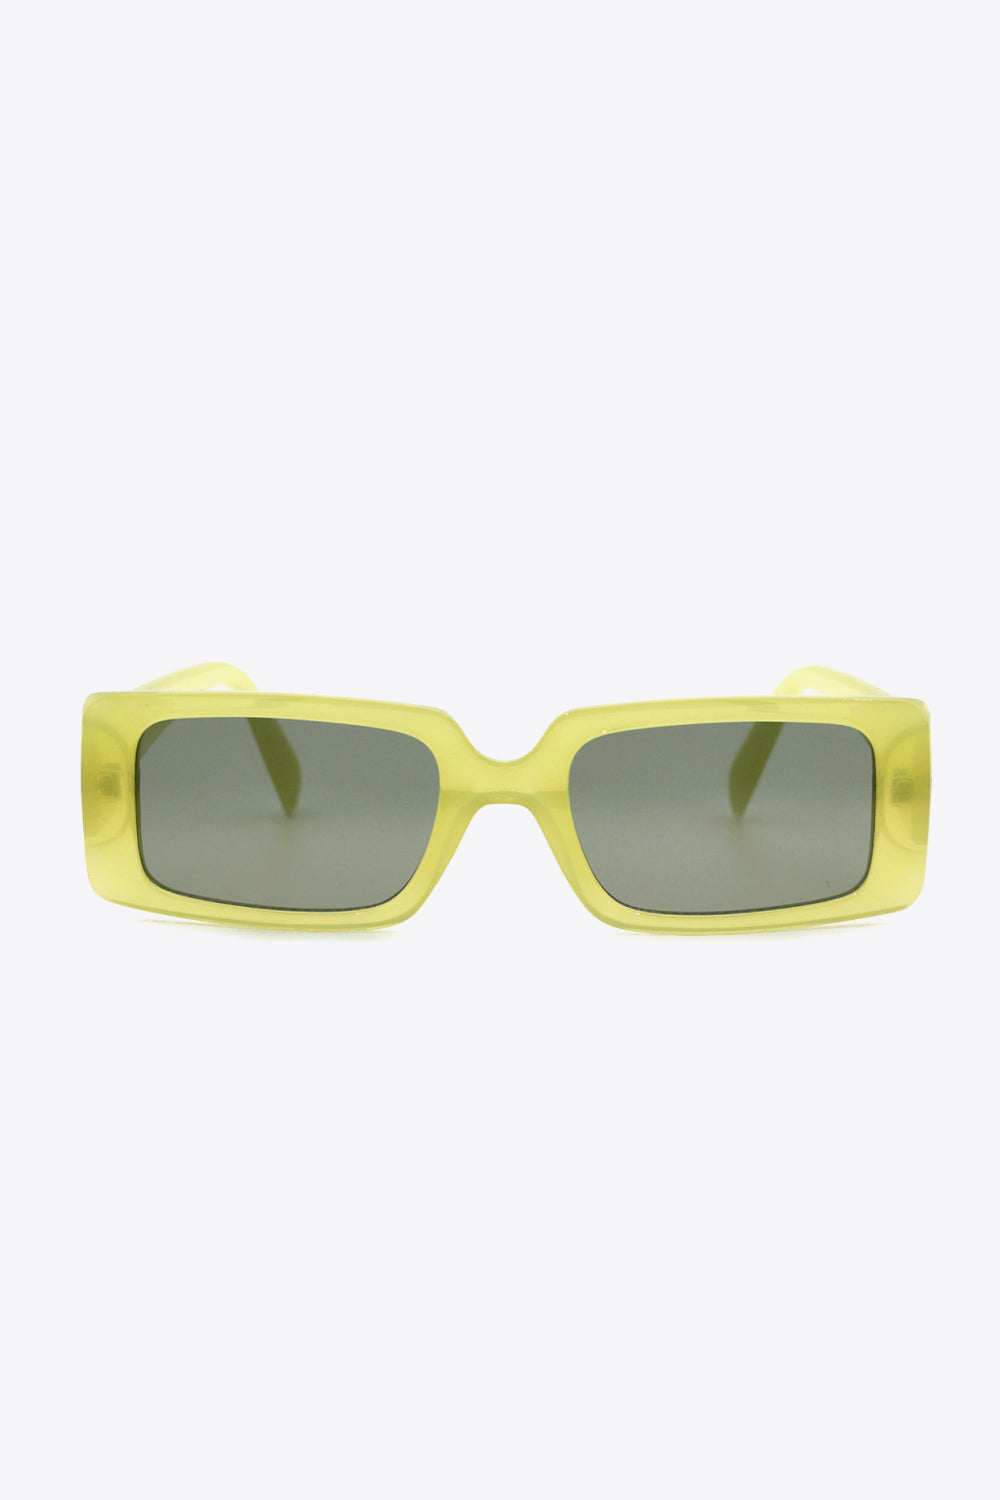 White Smoke The Sound Of Rain UV400 Polycarbonate Rectangle Sunglasses Sunglasses